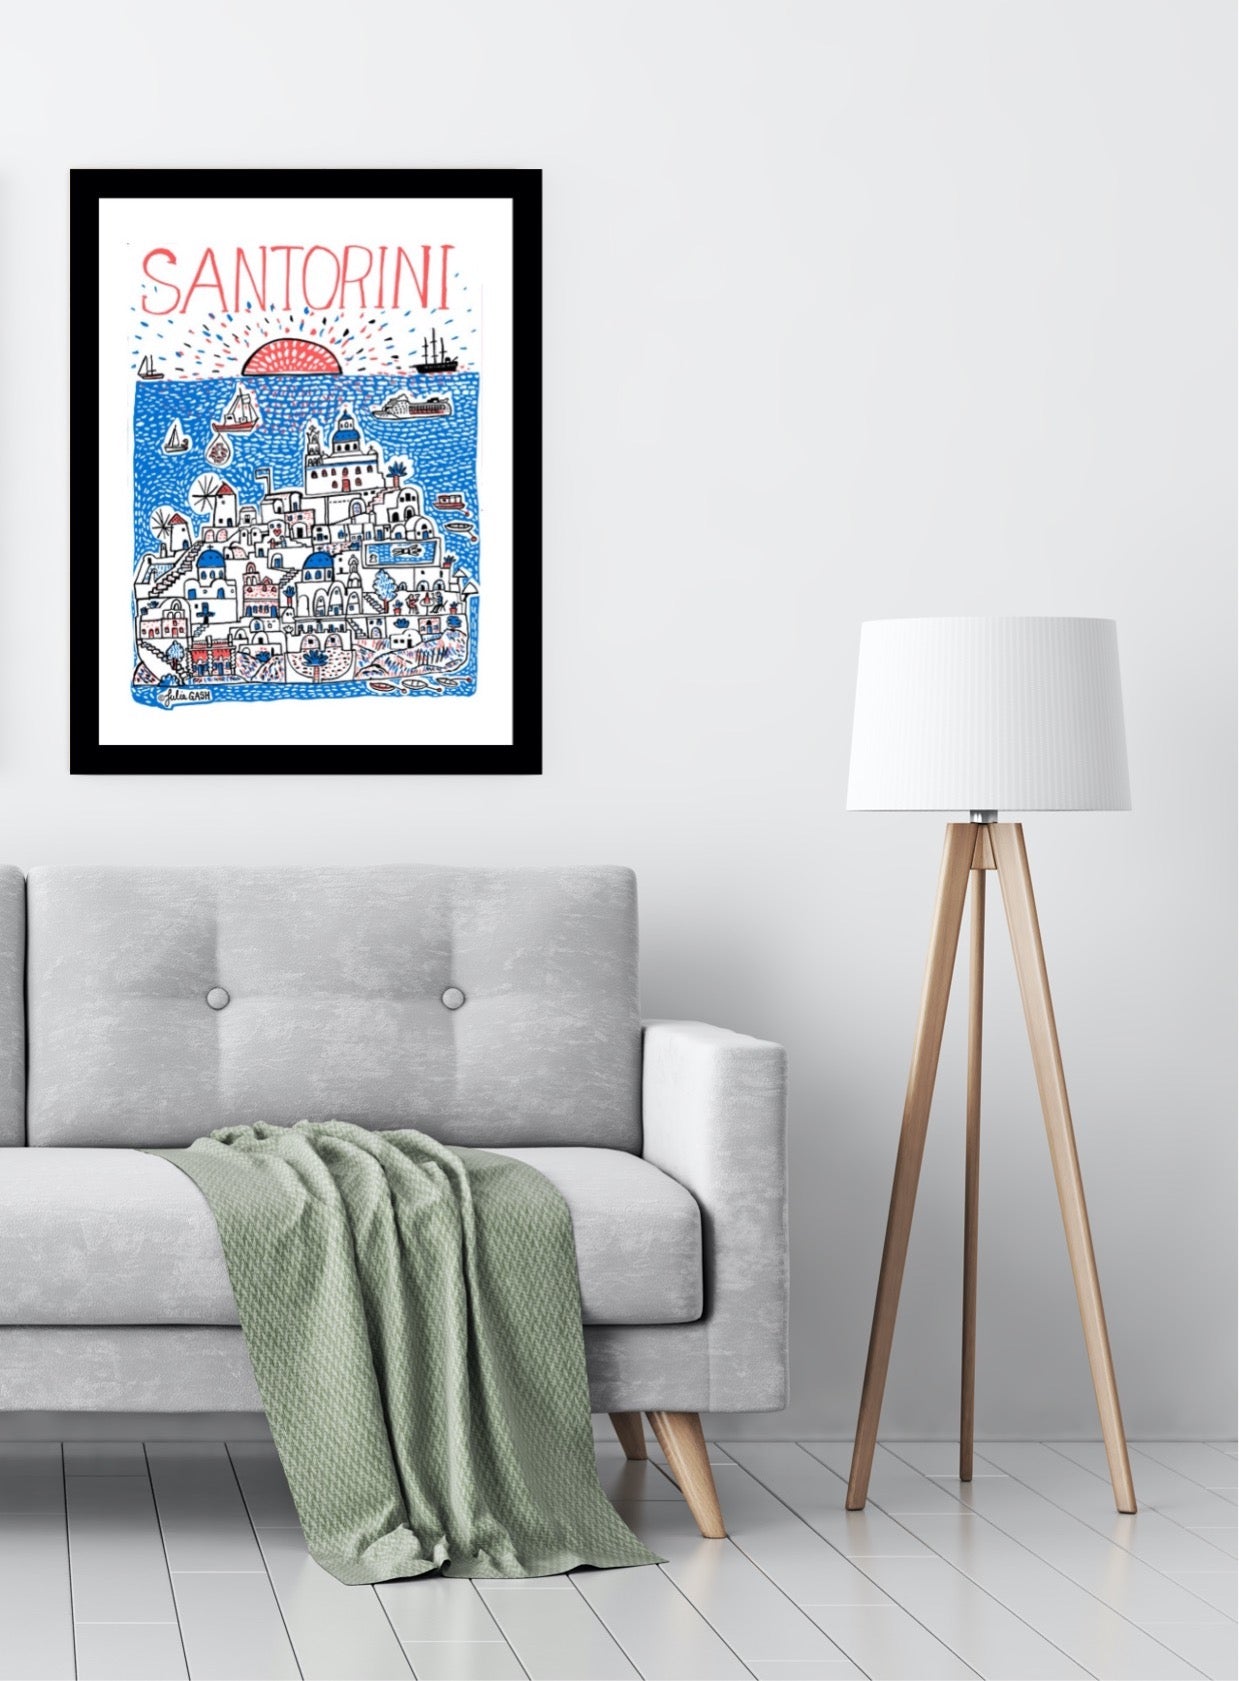 Wanderlust Santorini Greece Art Print -by British map illustrator Julia Gash